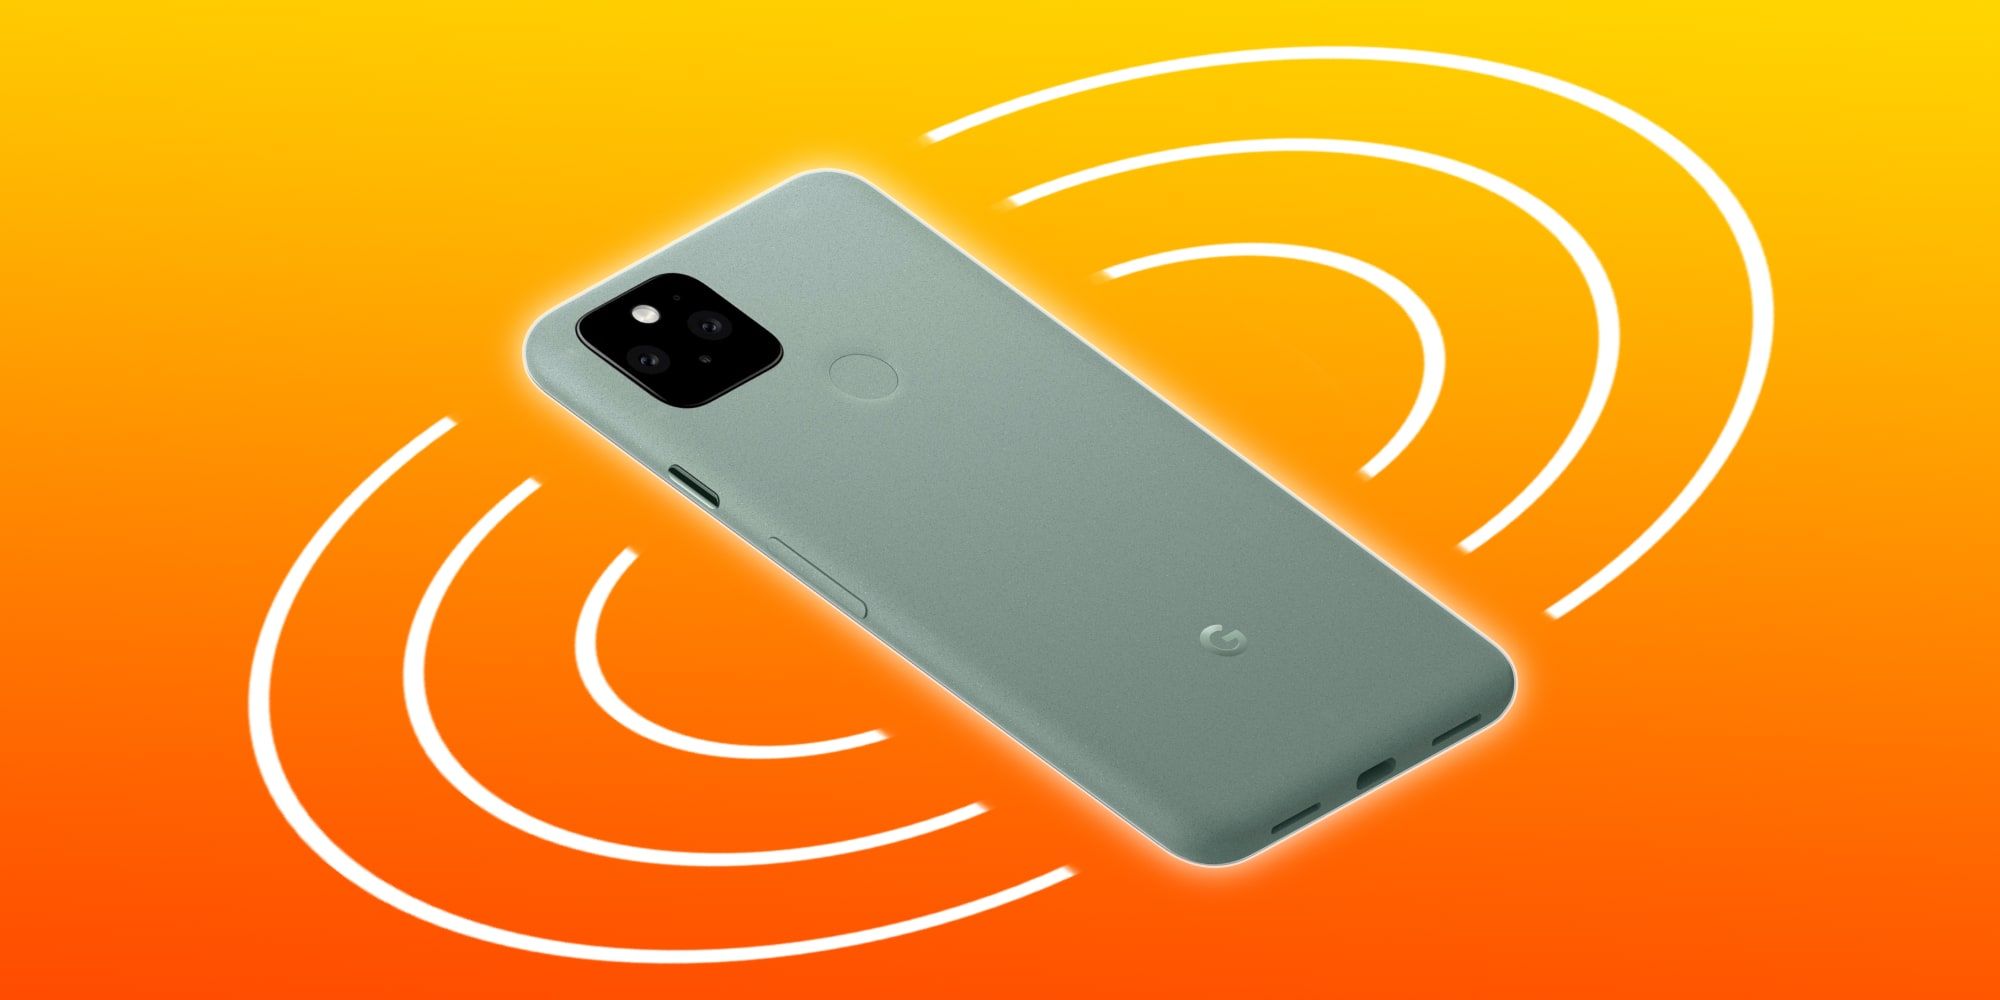 Google Pixel 5 Radiating Rings Over Yellow And Orange